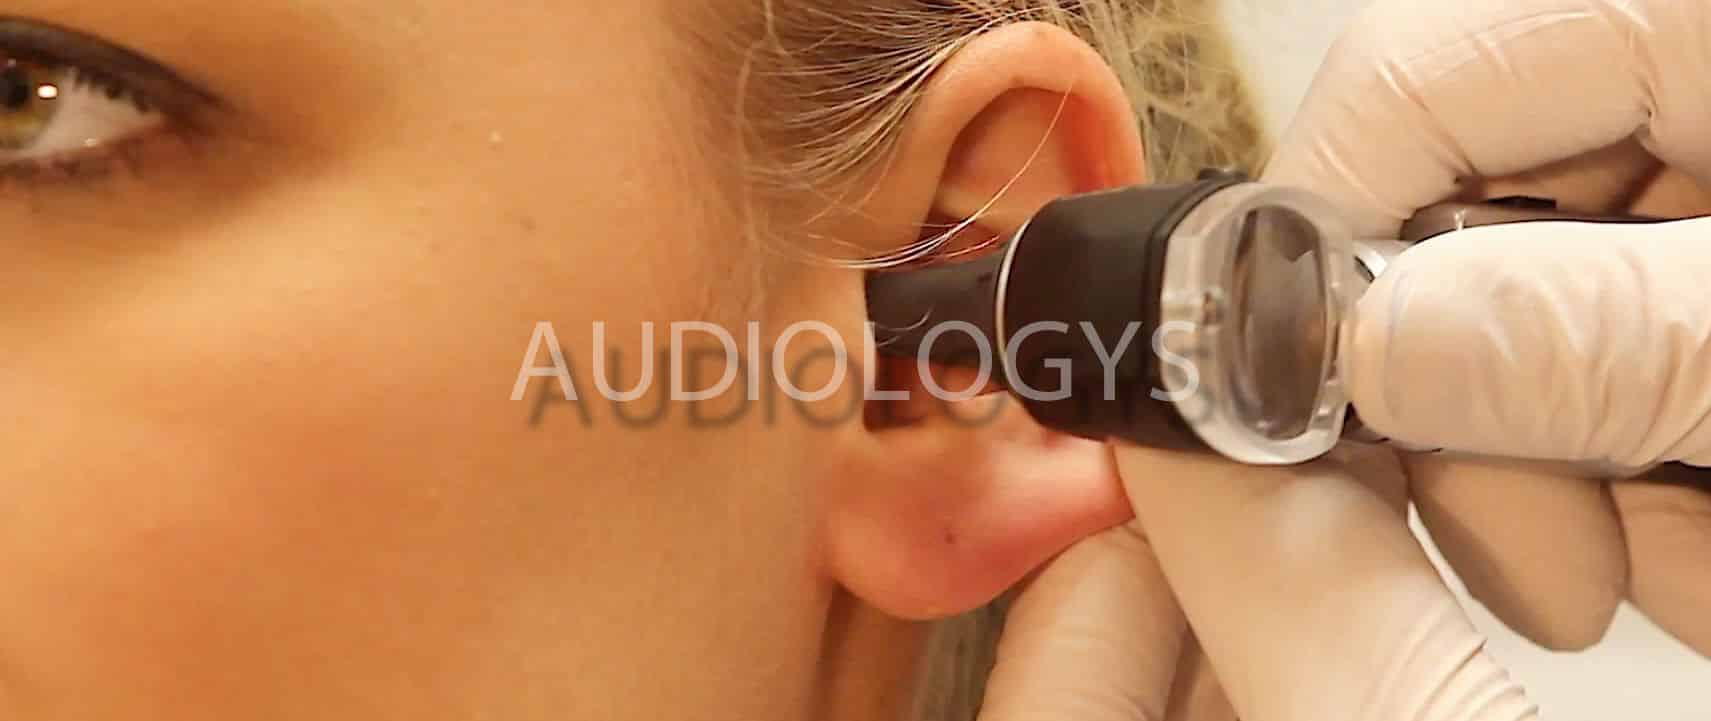 Protections auditives en silicone - Bouchons oreilles discrets